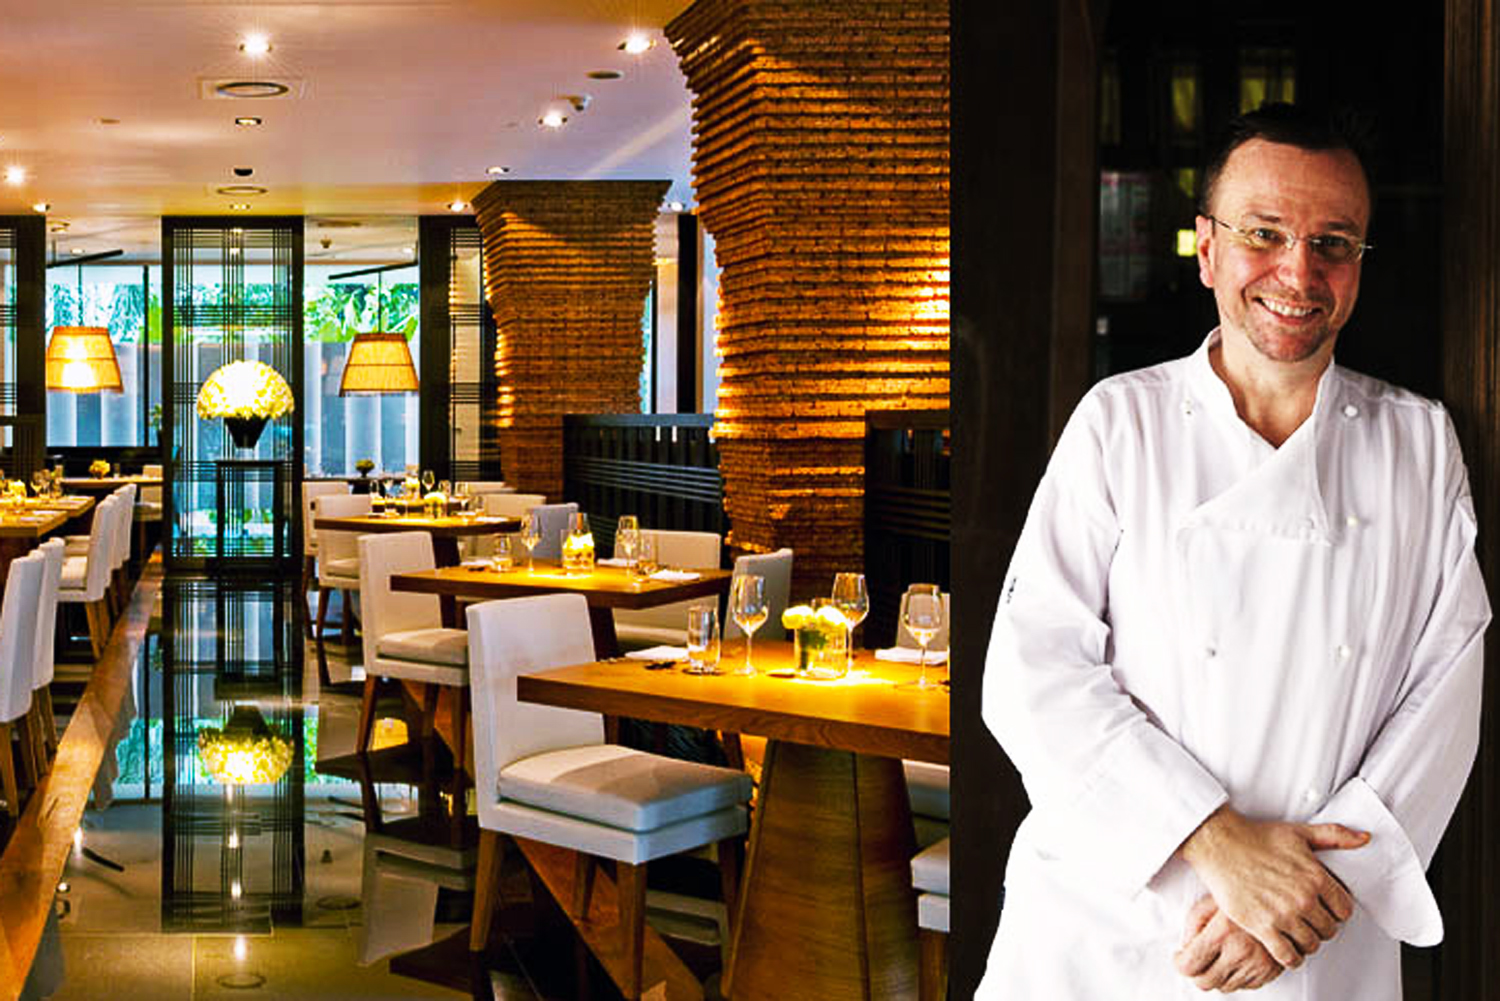 David Thompson's nahm restaurant was placed number 32 in The World's 50 Best Restaurant List.